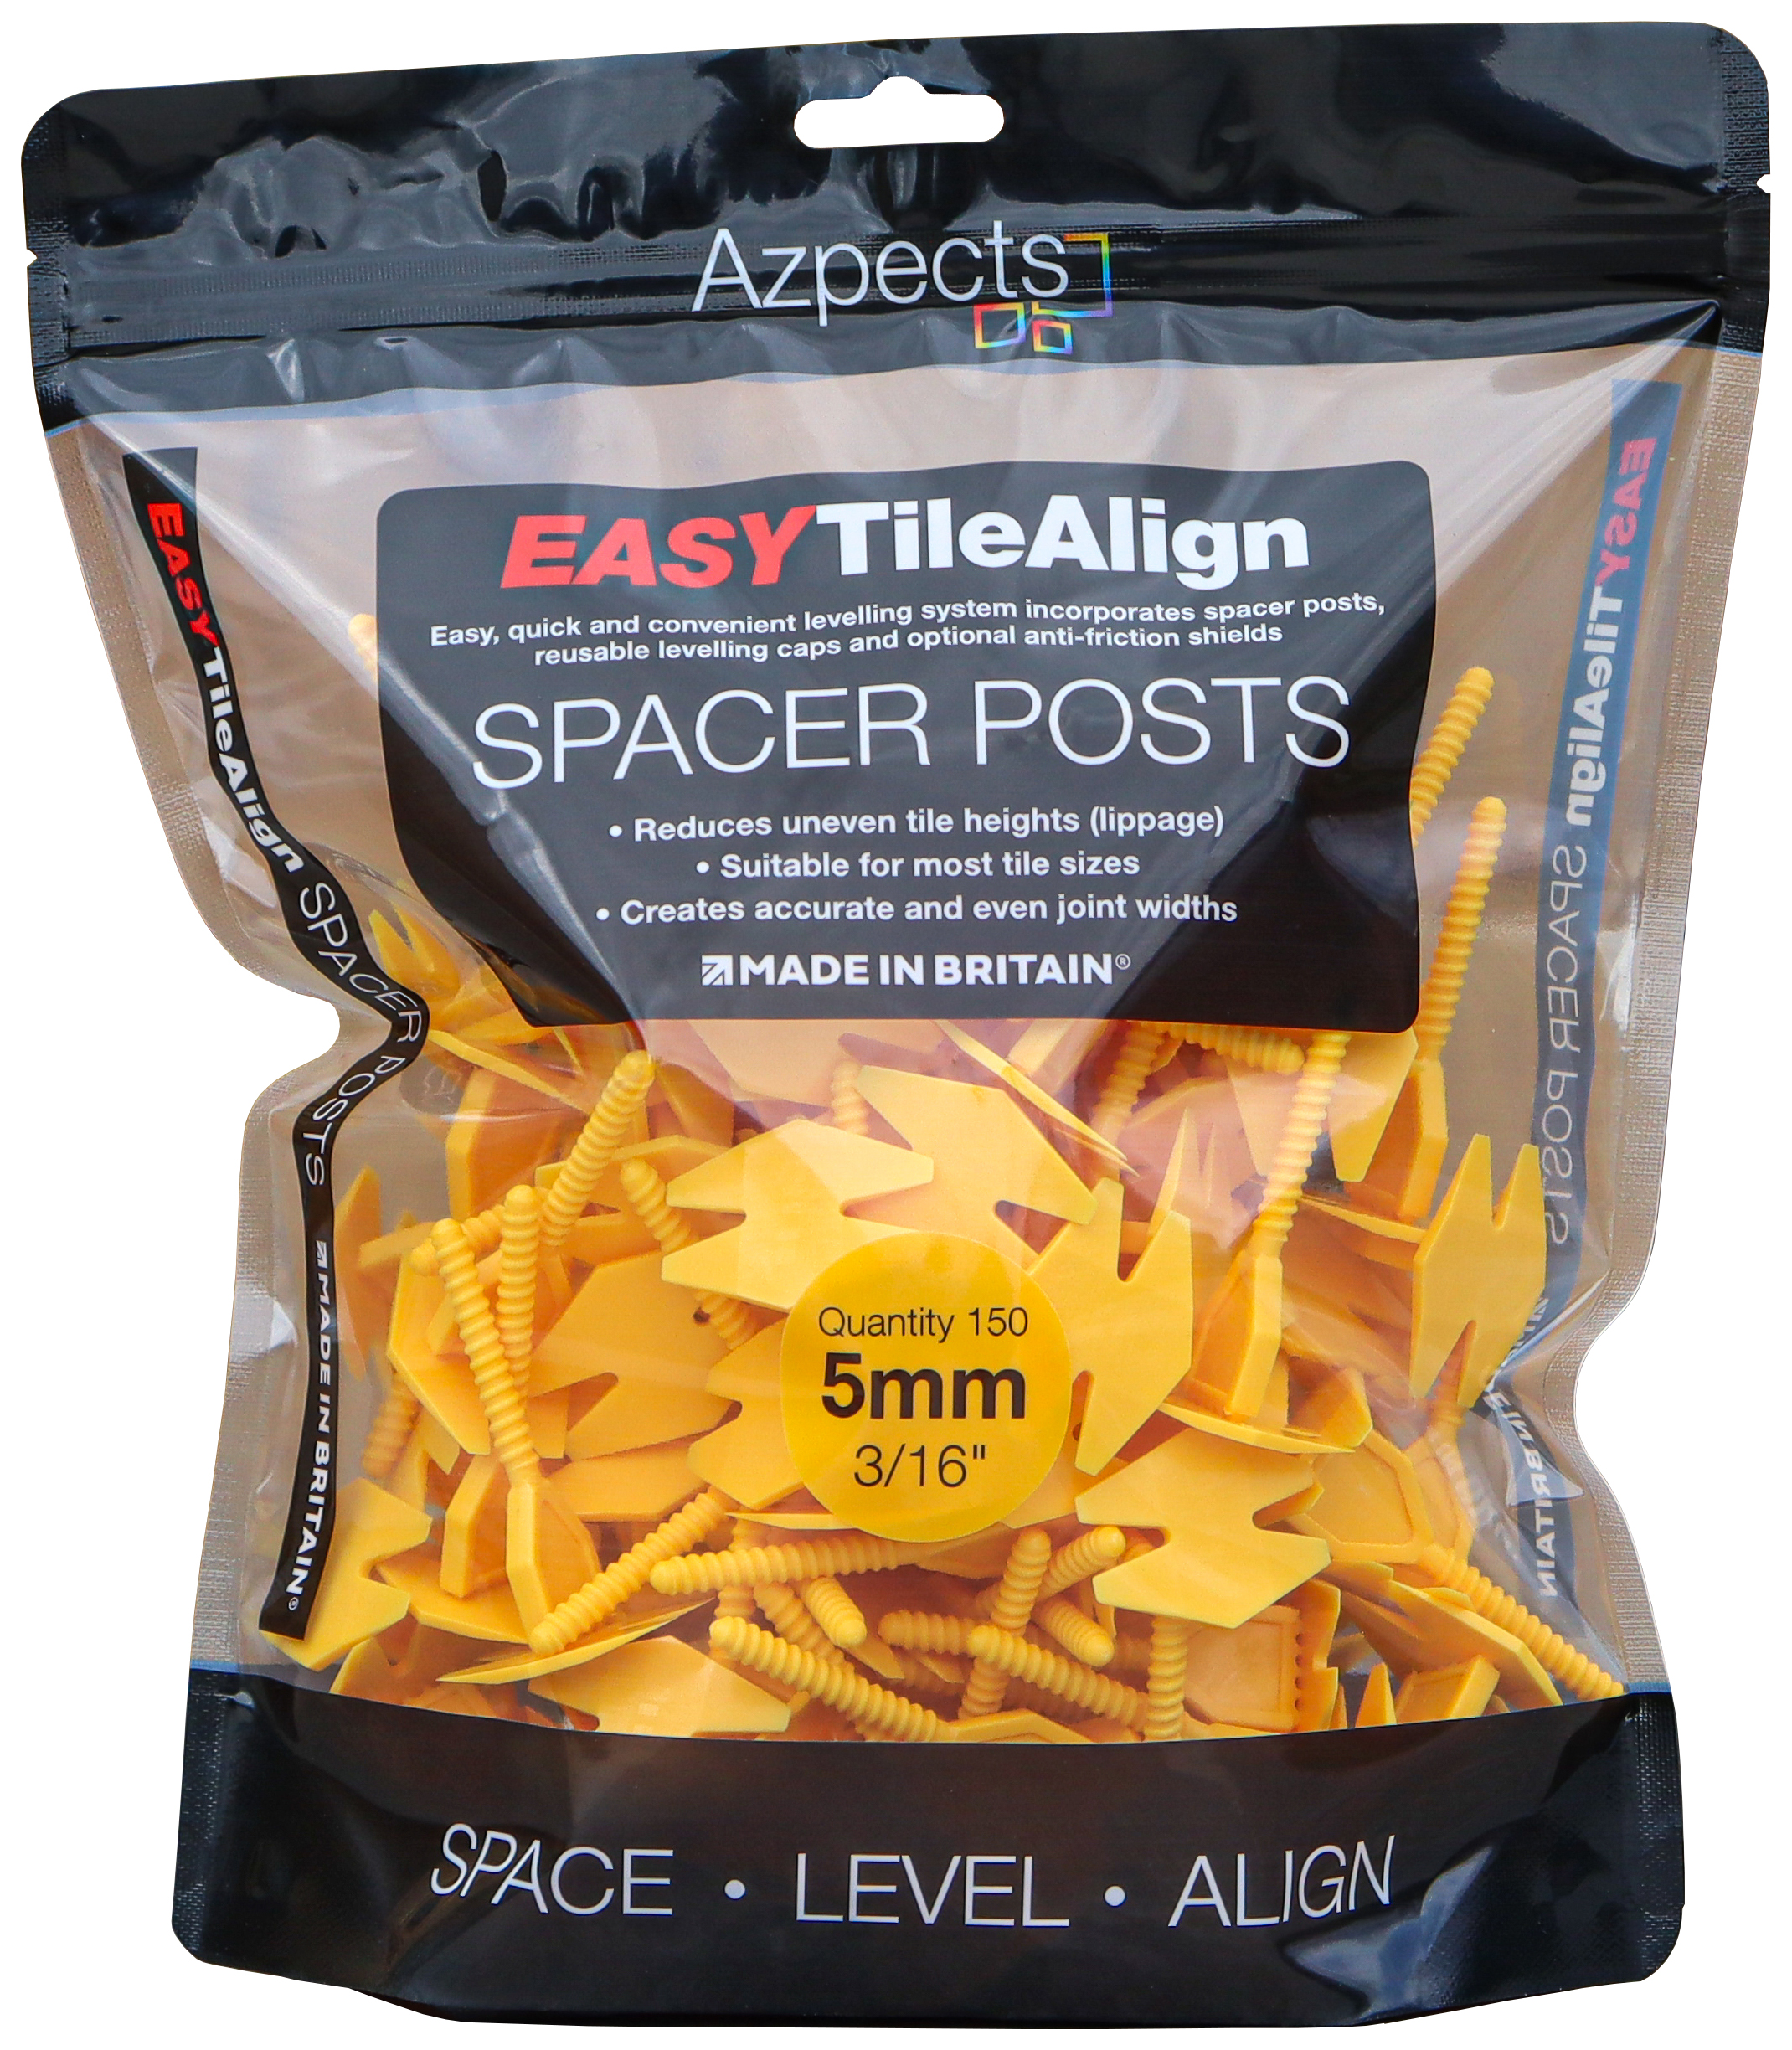 Easy Tile Align 5mm Spacer Posts - Pack of 150